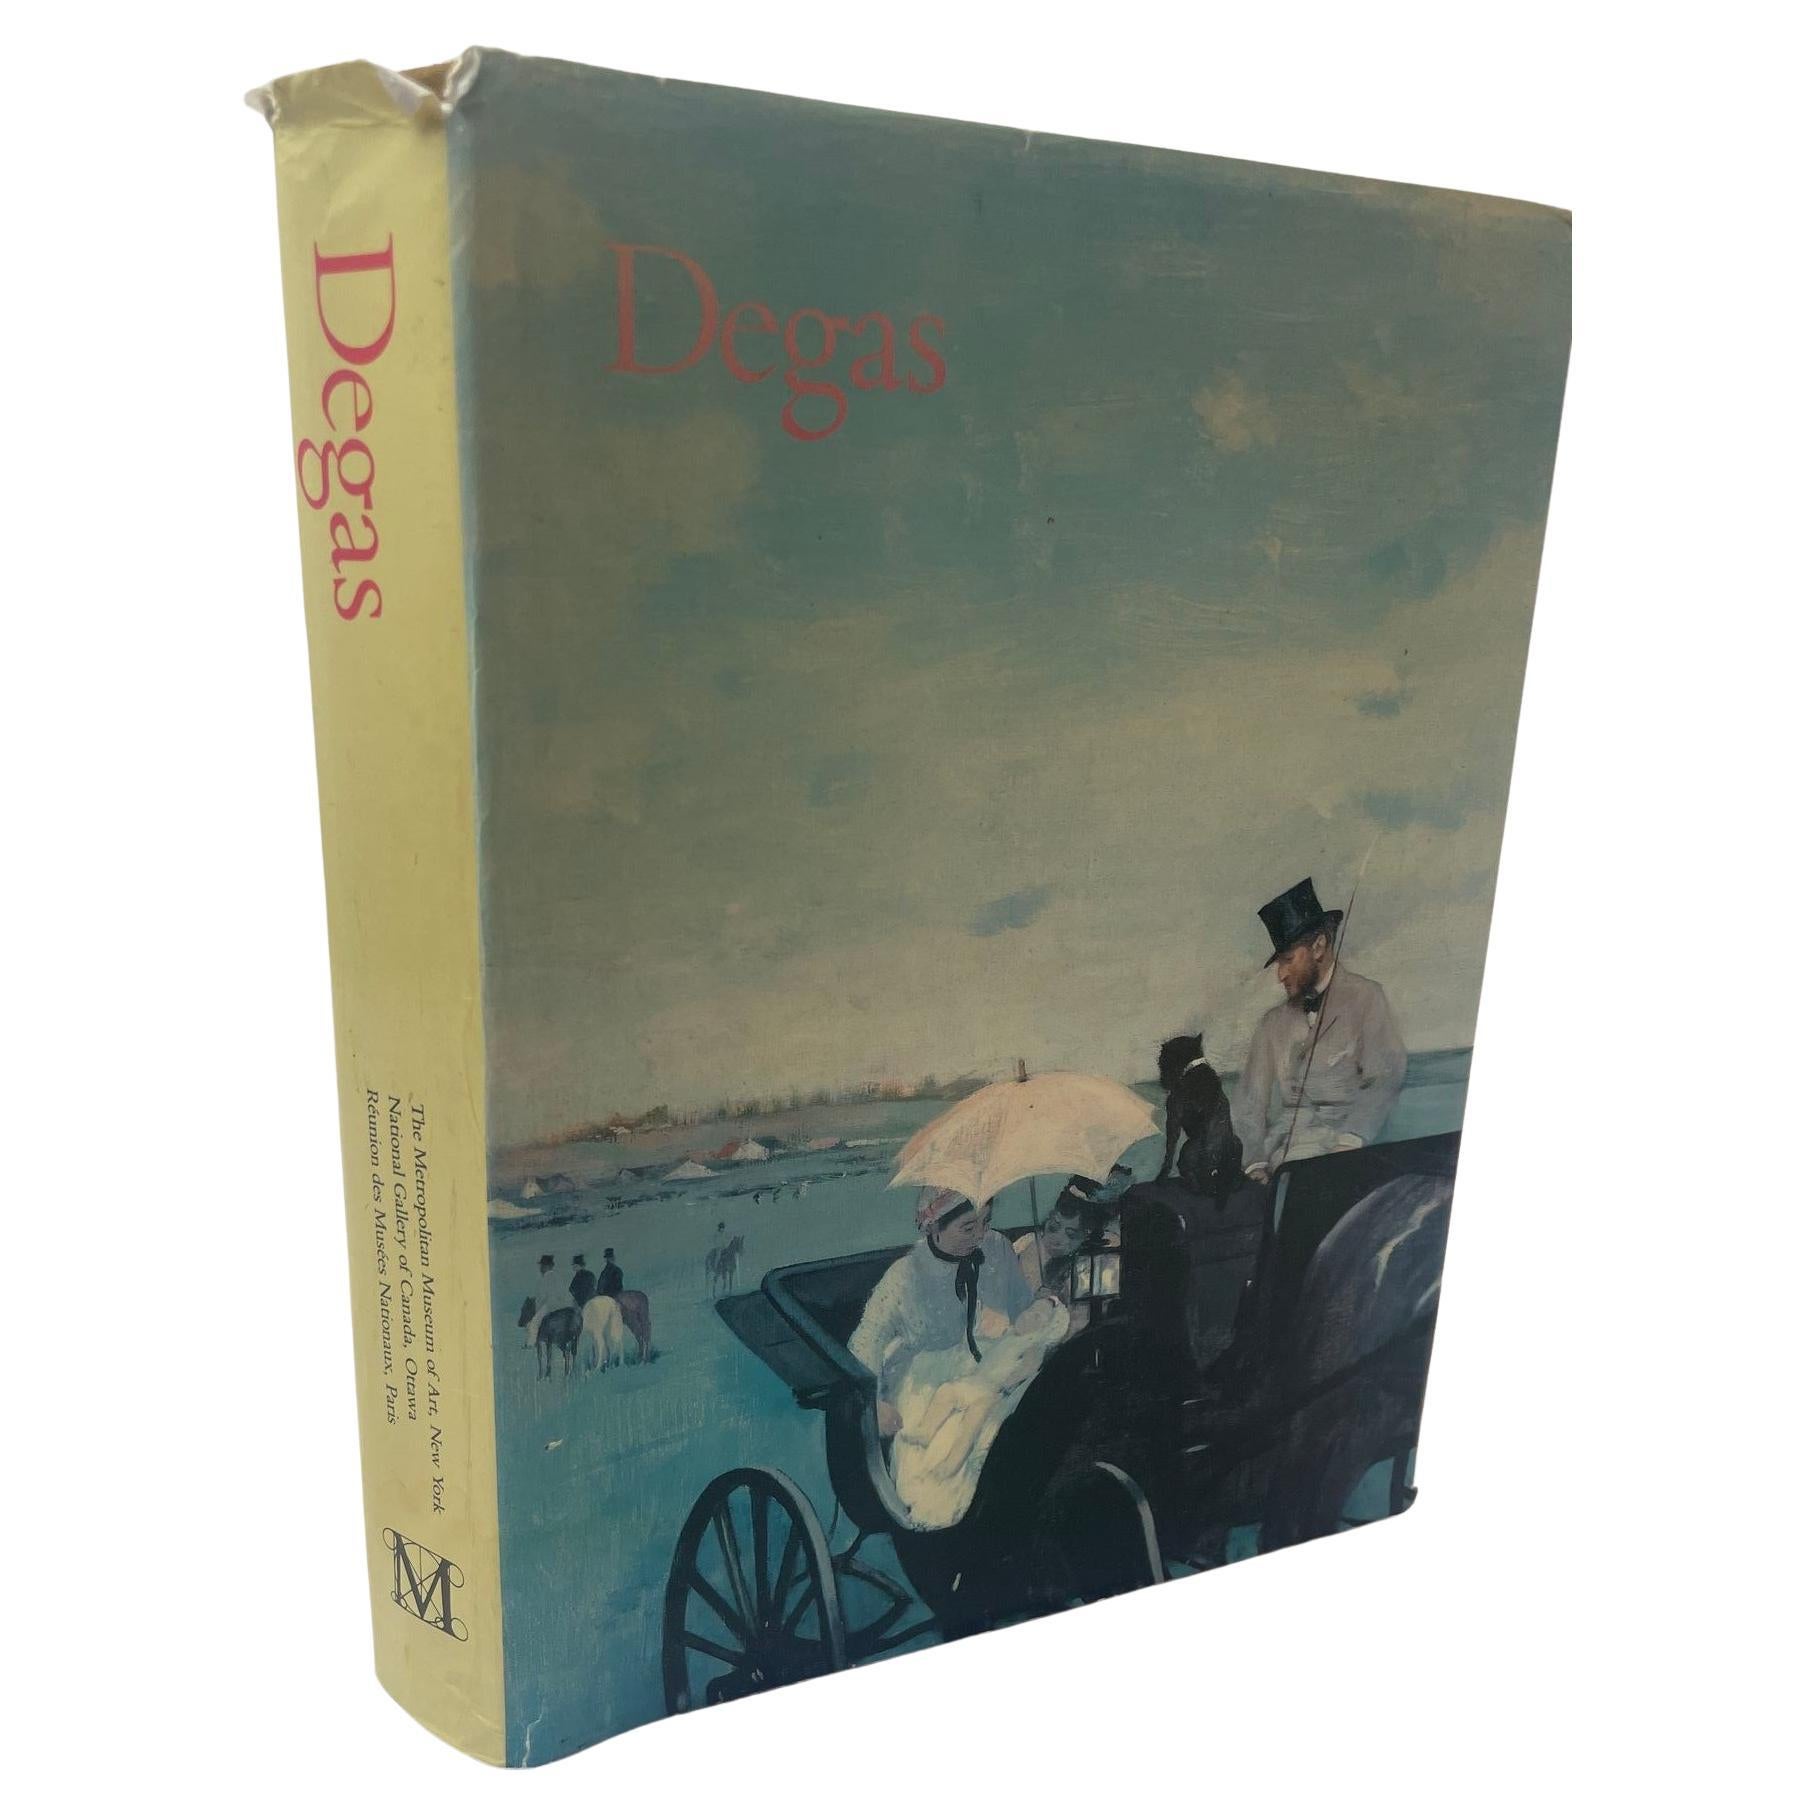 Degas by Jean Sutherland Boggs Hardcover Book Met Museum of Art 1st Ed. 1988